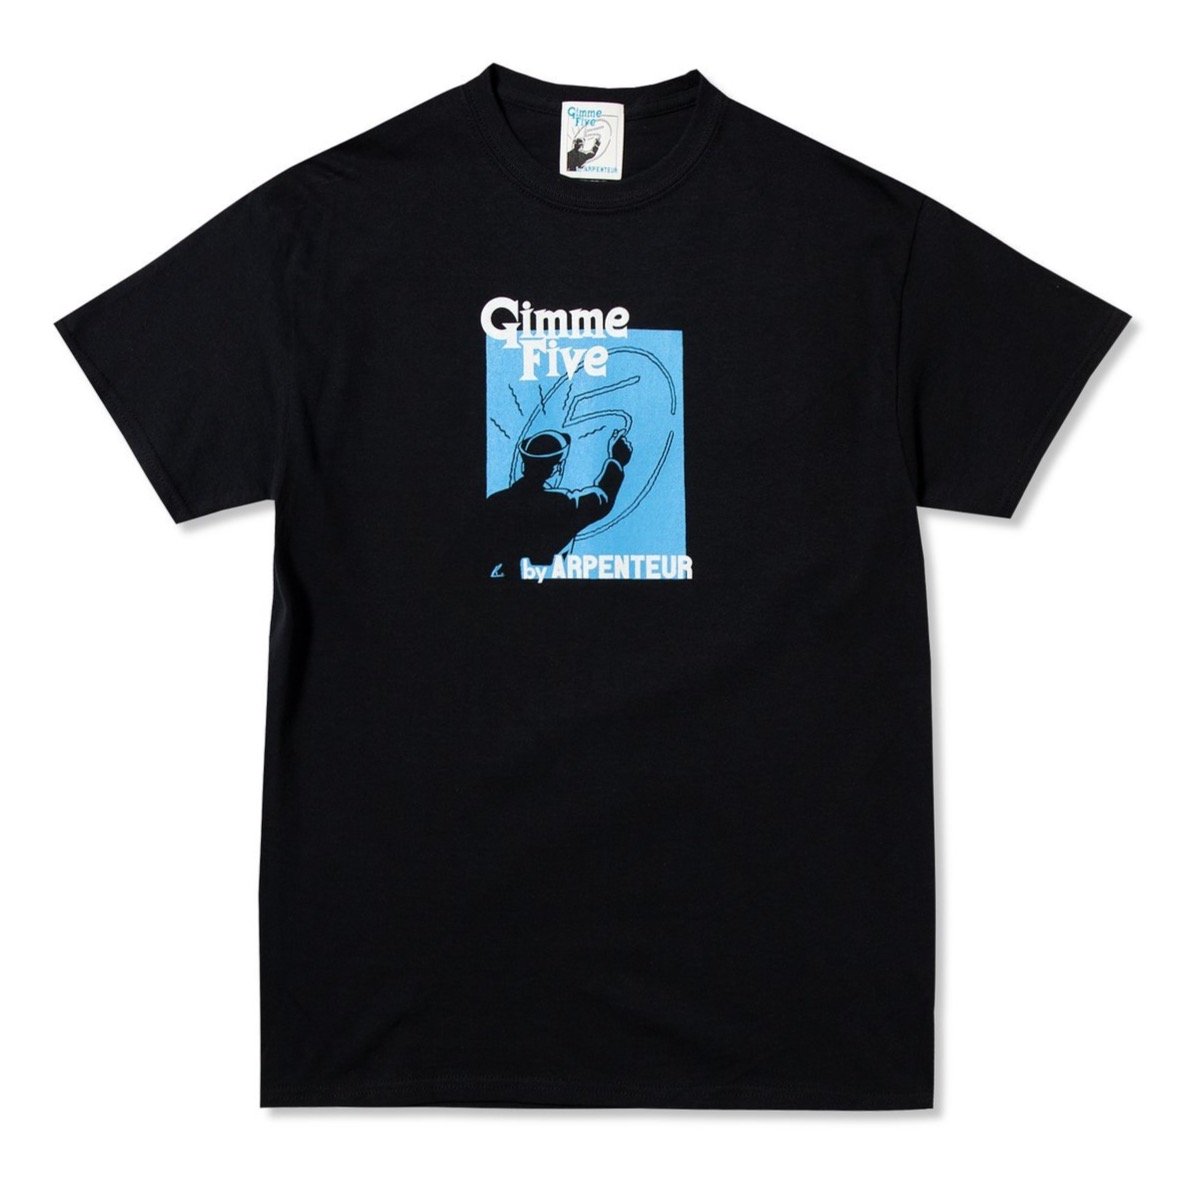 Gimme Five by Arpenteur Chalk Action T-Shirt